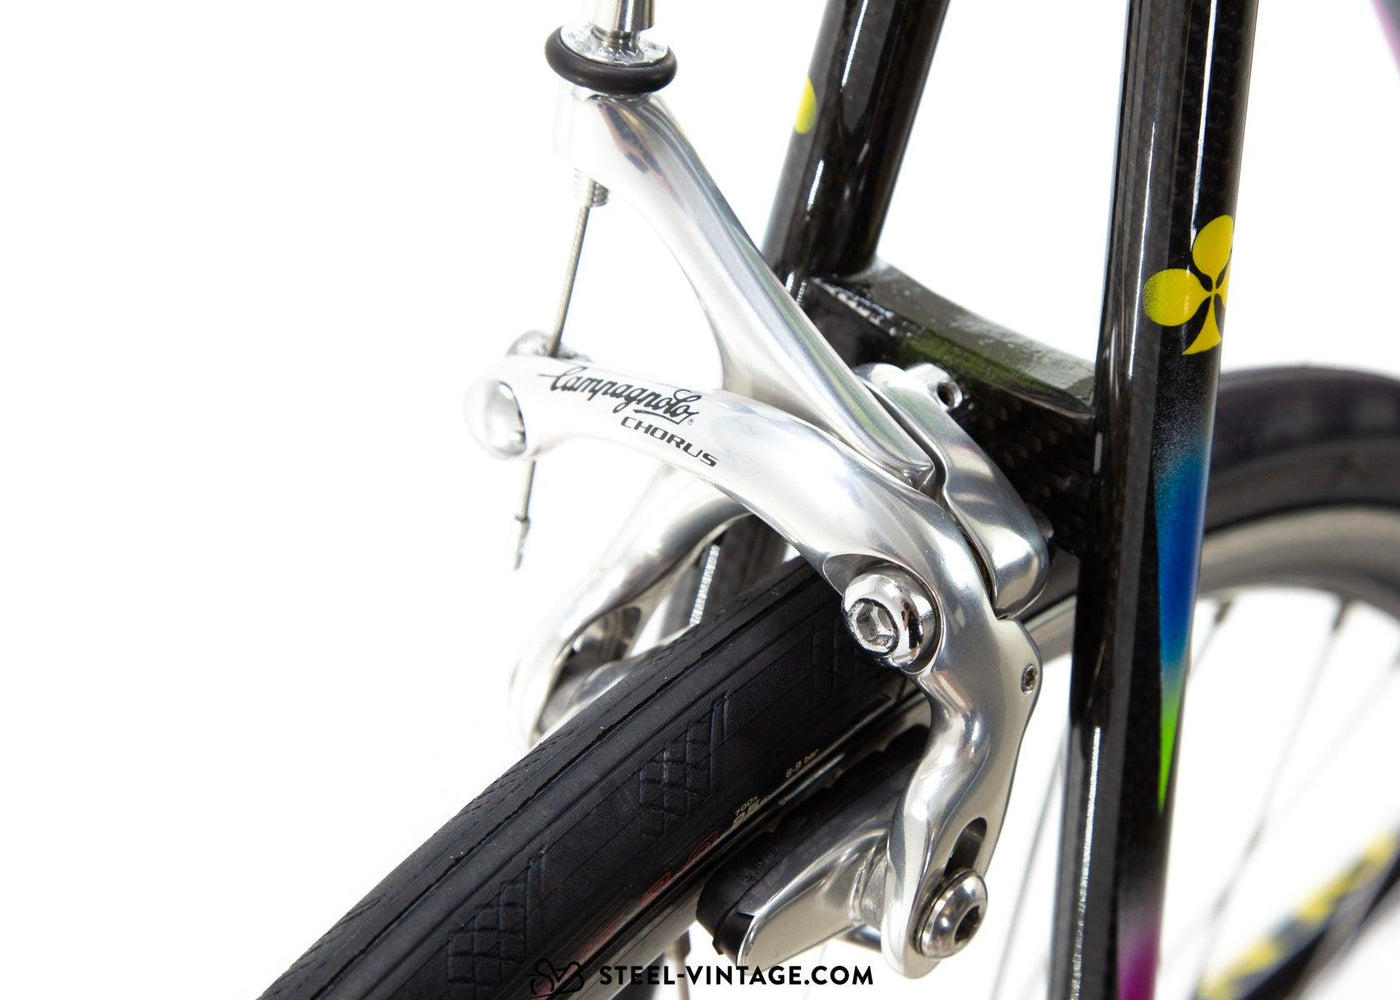 Colnago C40 Paris Roubaix Limited Edition Road Bicycle 1996 - Steel Vintage Bikes